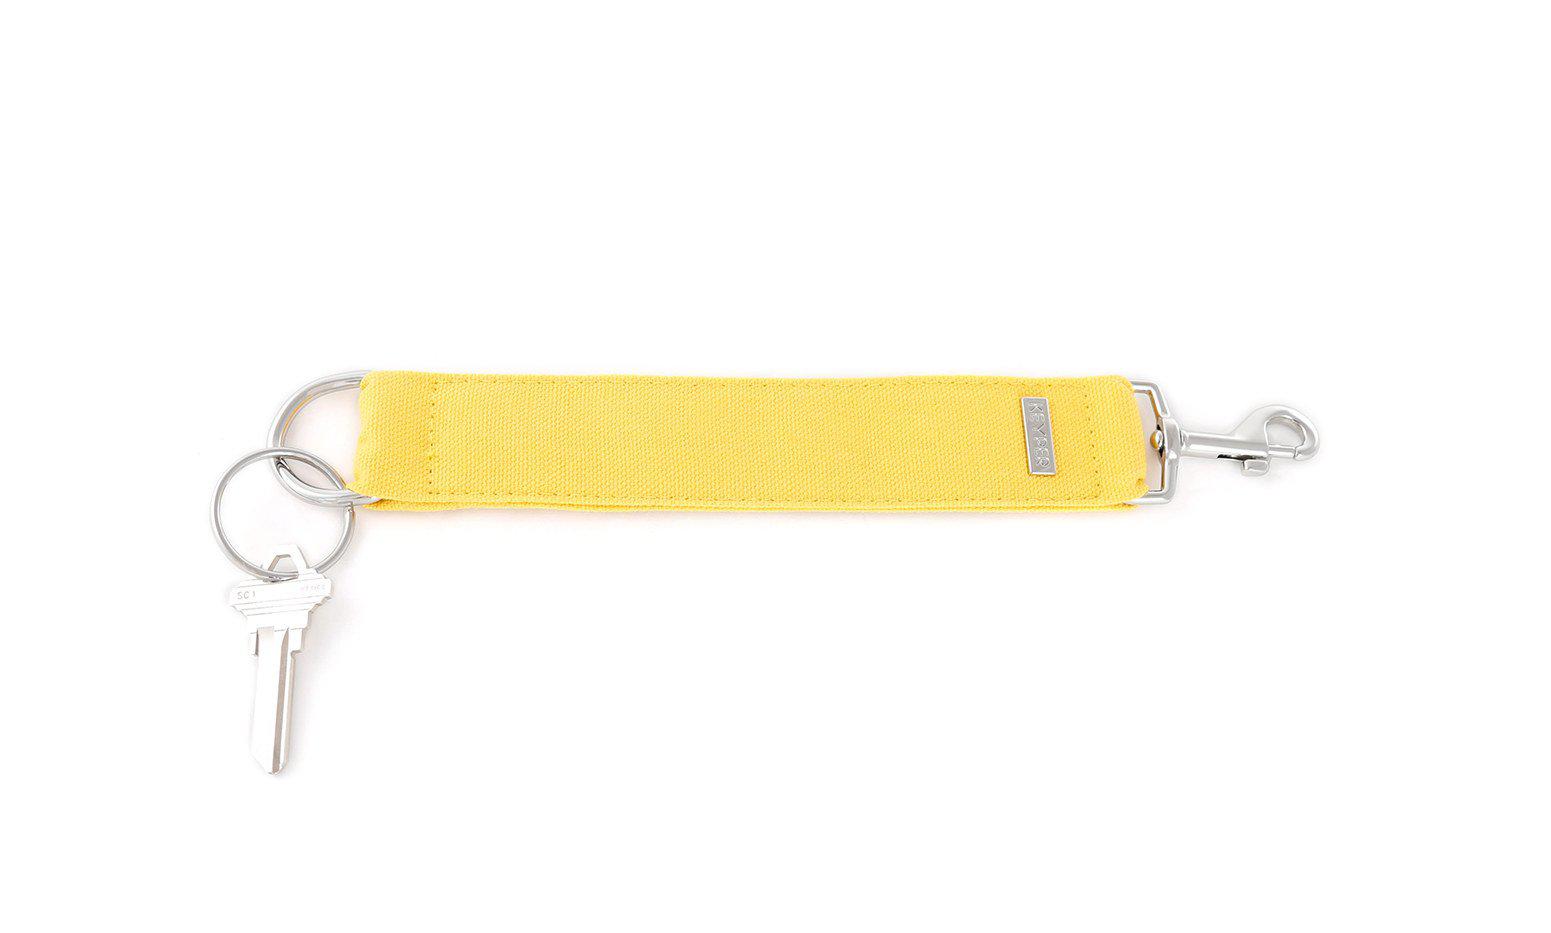  KEYPER® Key Ring Bracelet - Useful Keychain Wristlet